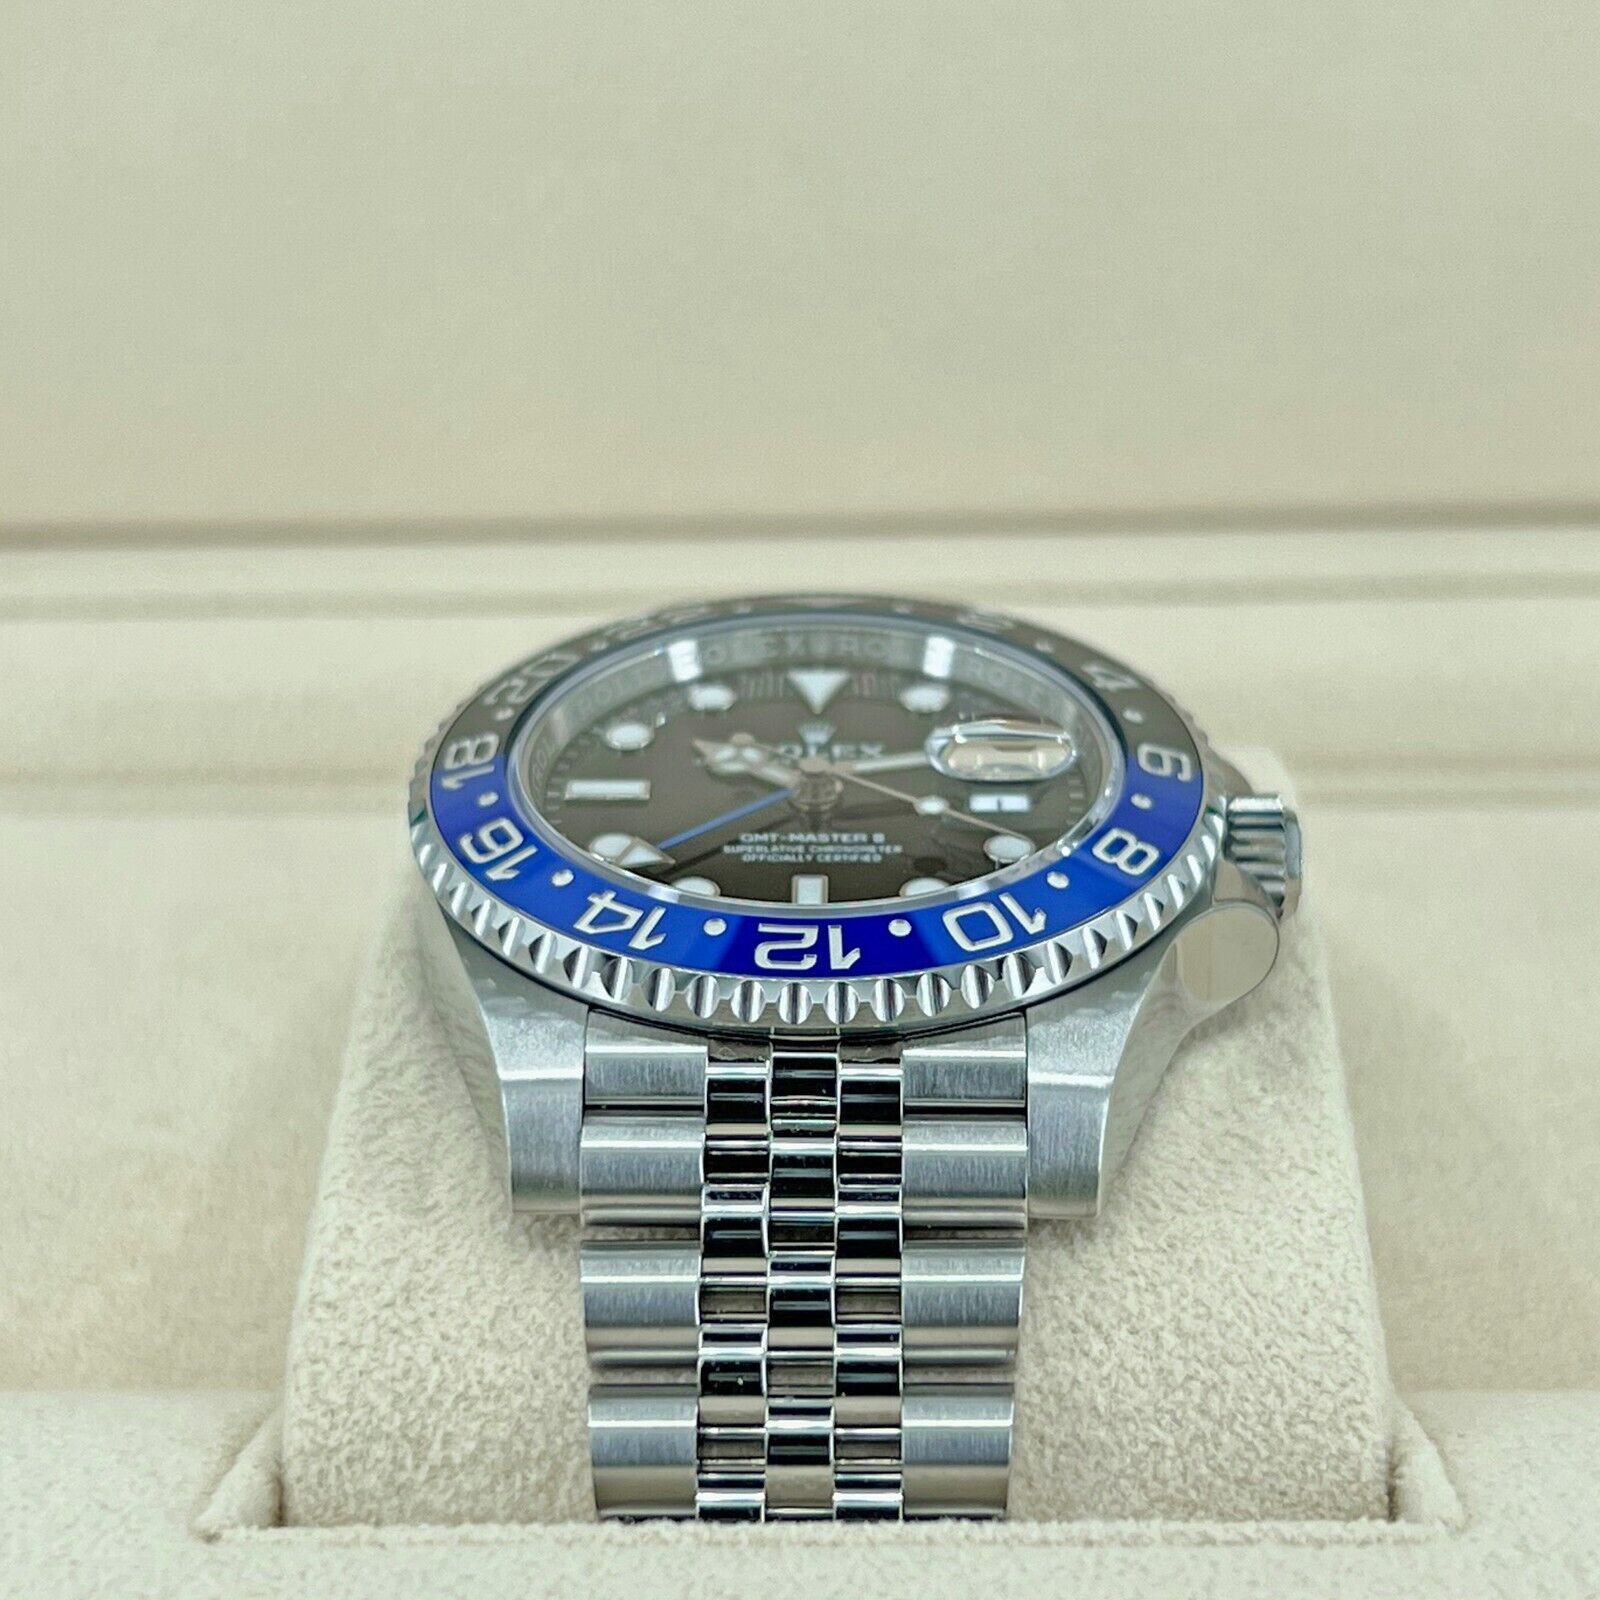 Rolex GMT-Master II, BATGIRL, Stainless Steel, 40mm, Ref# 126710blnr-0002, Side